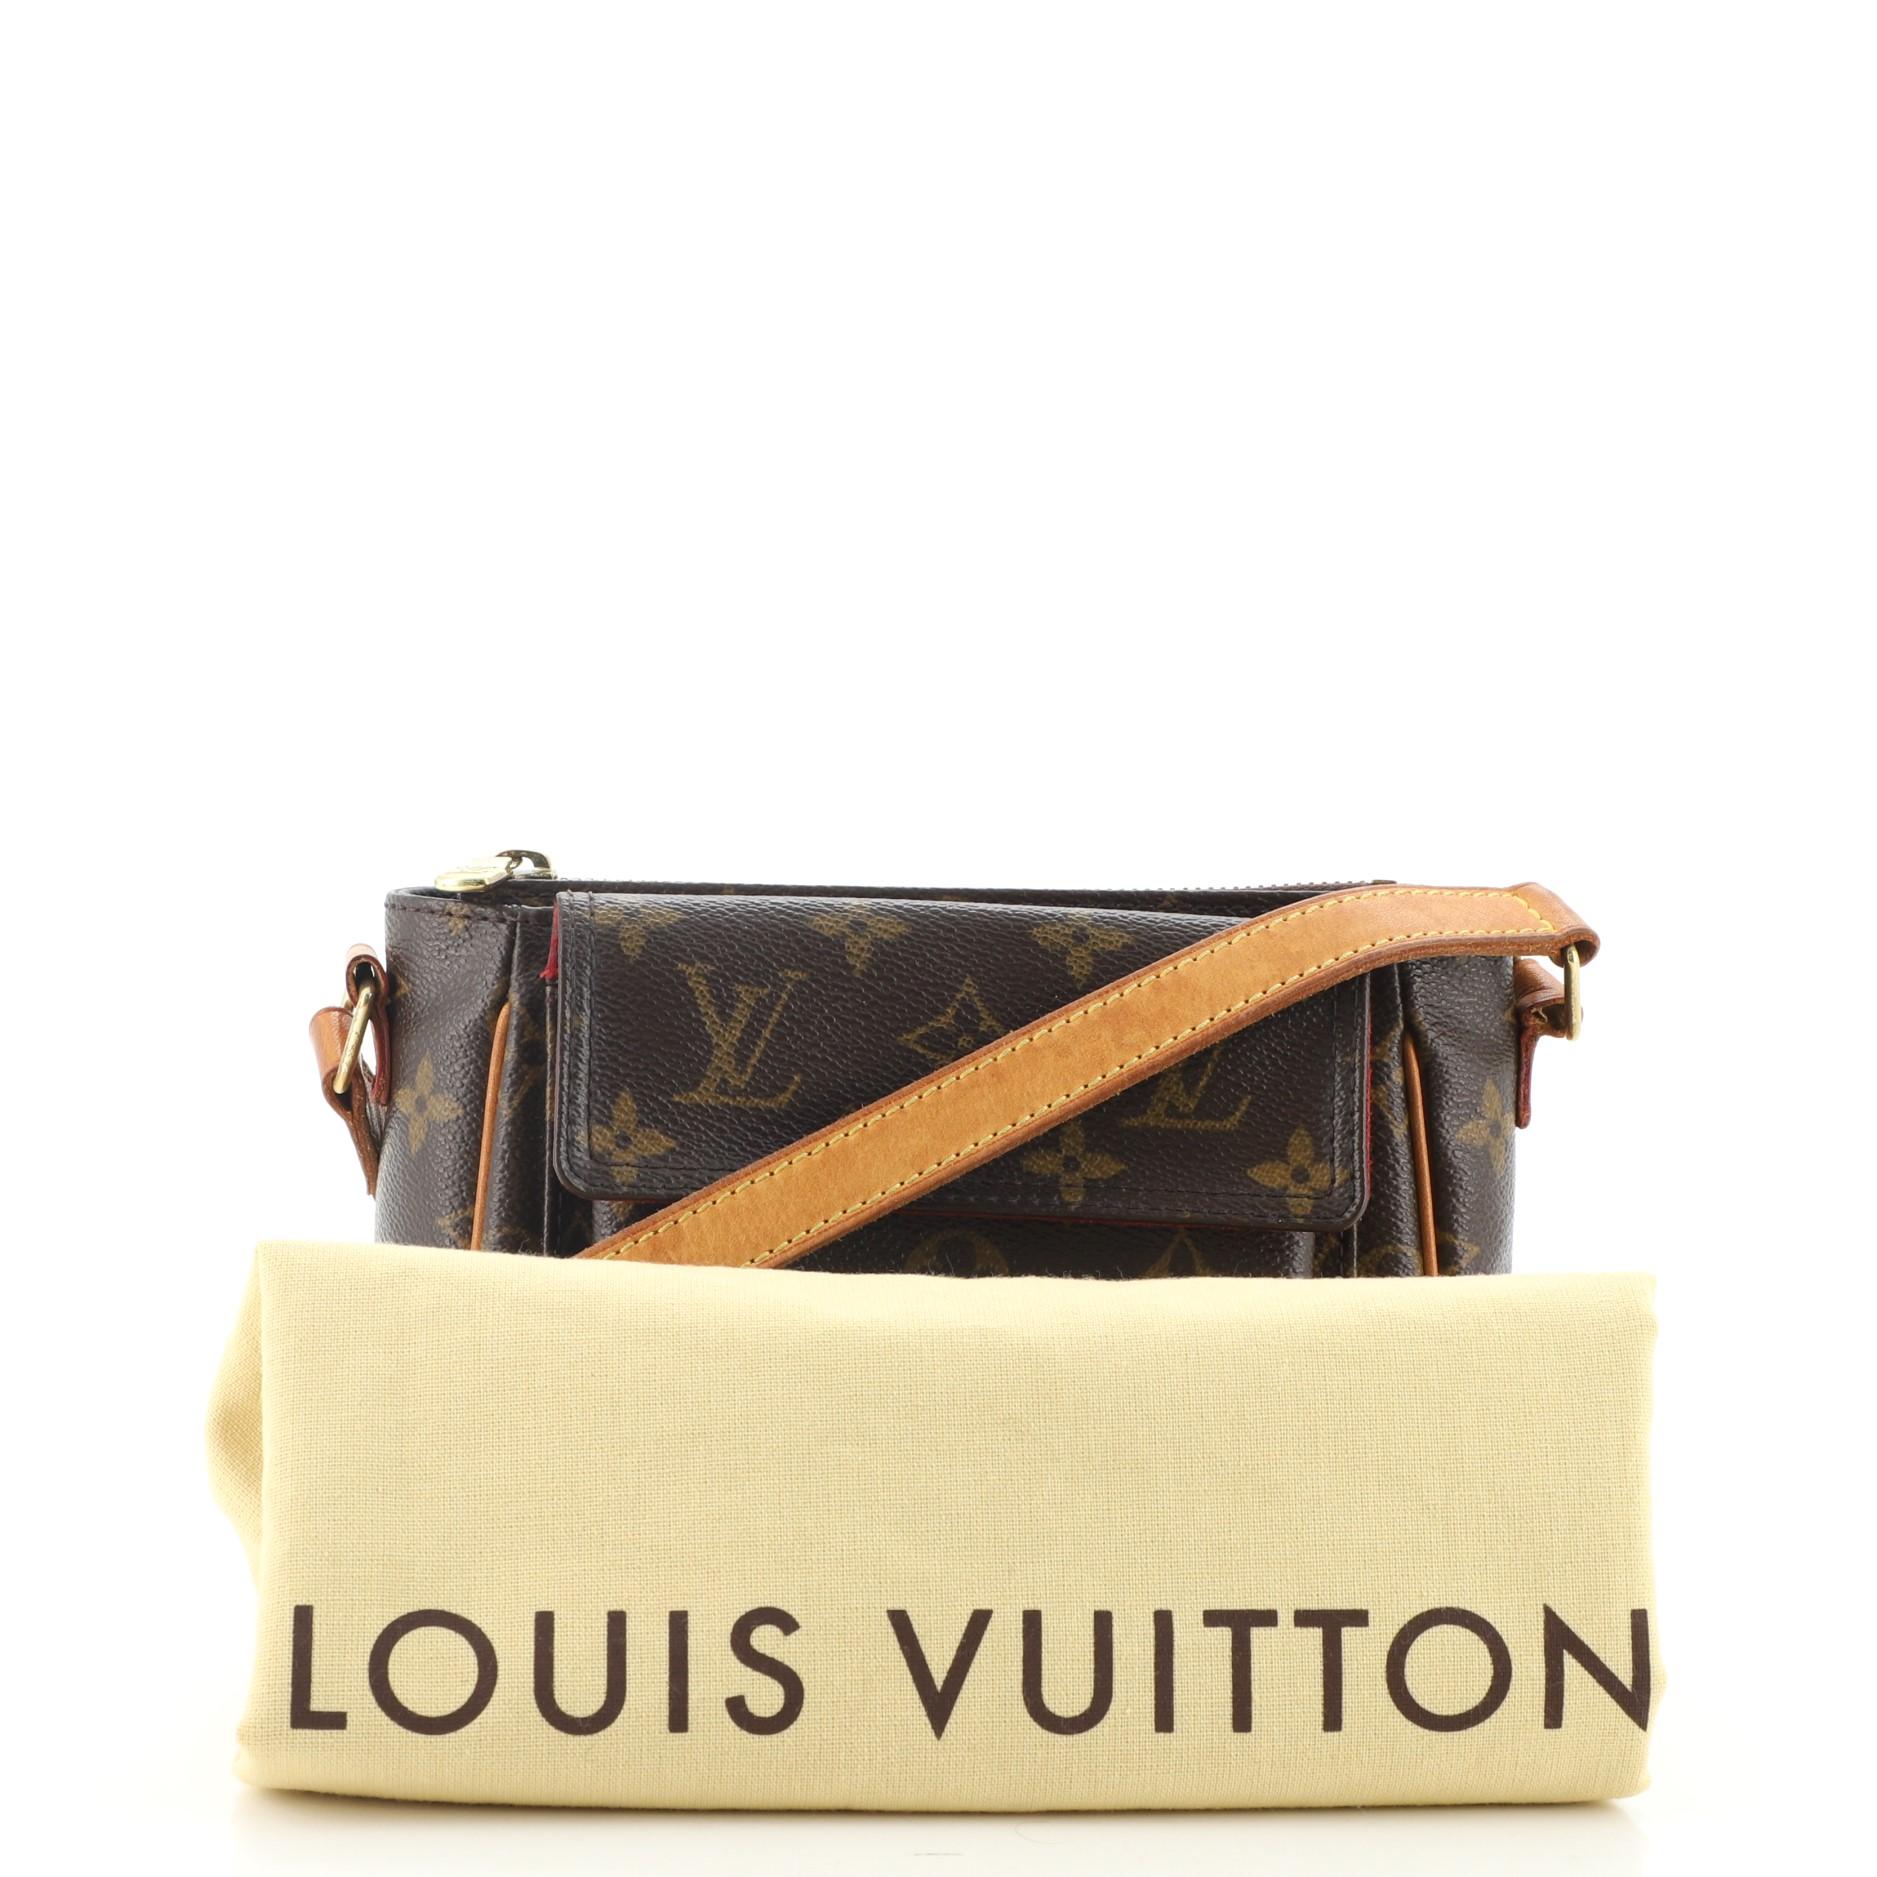 Louis Vuitton Cite PM 8.5 - clothing & accessories - by owner - apparel  sale - craigslist